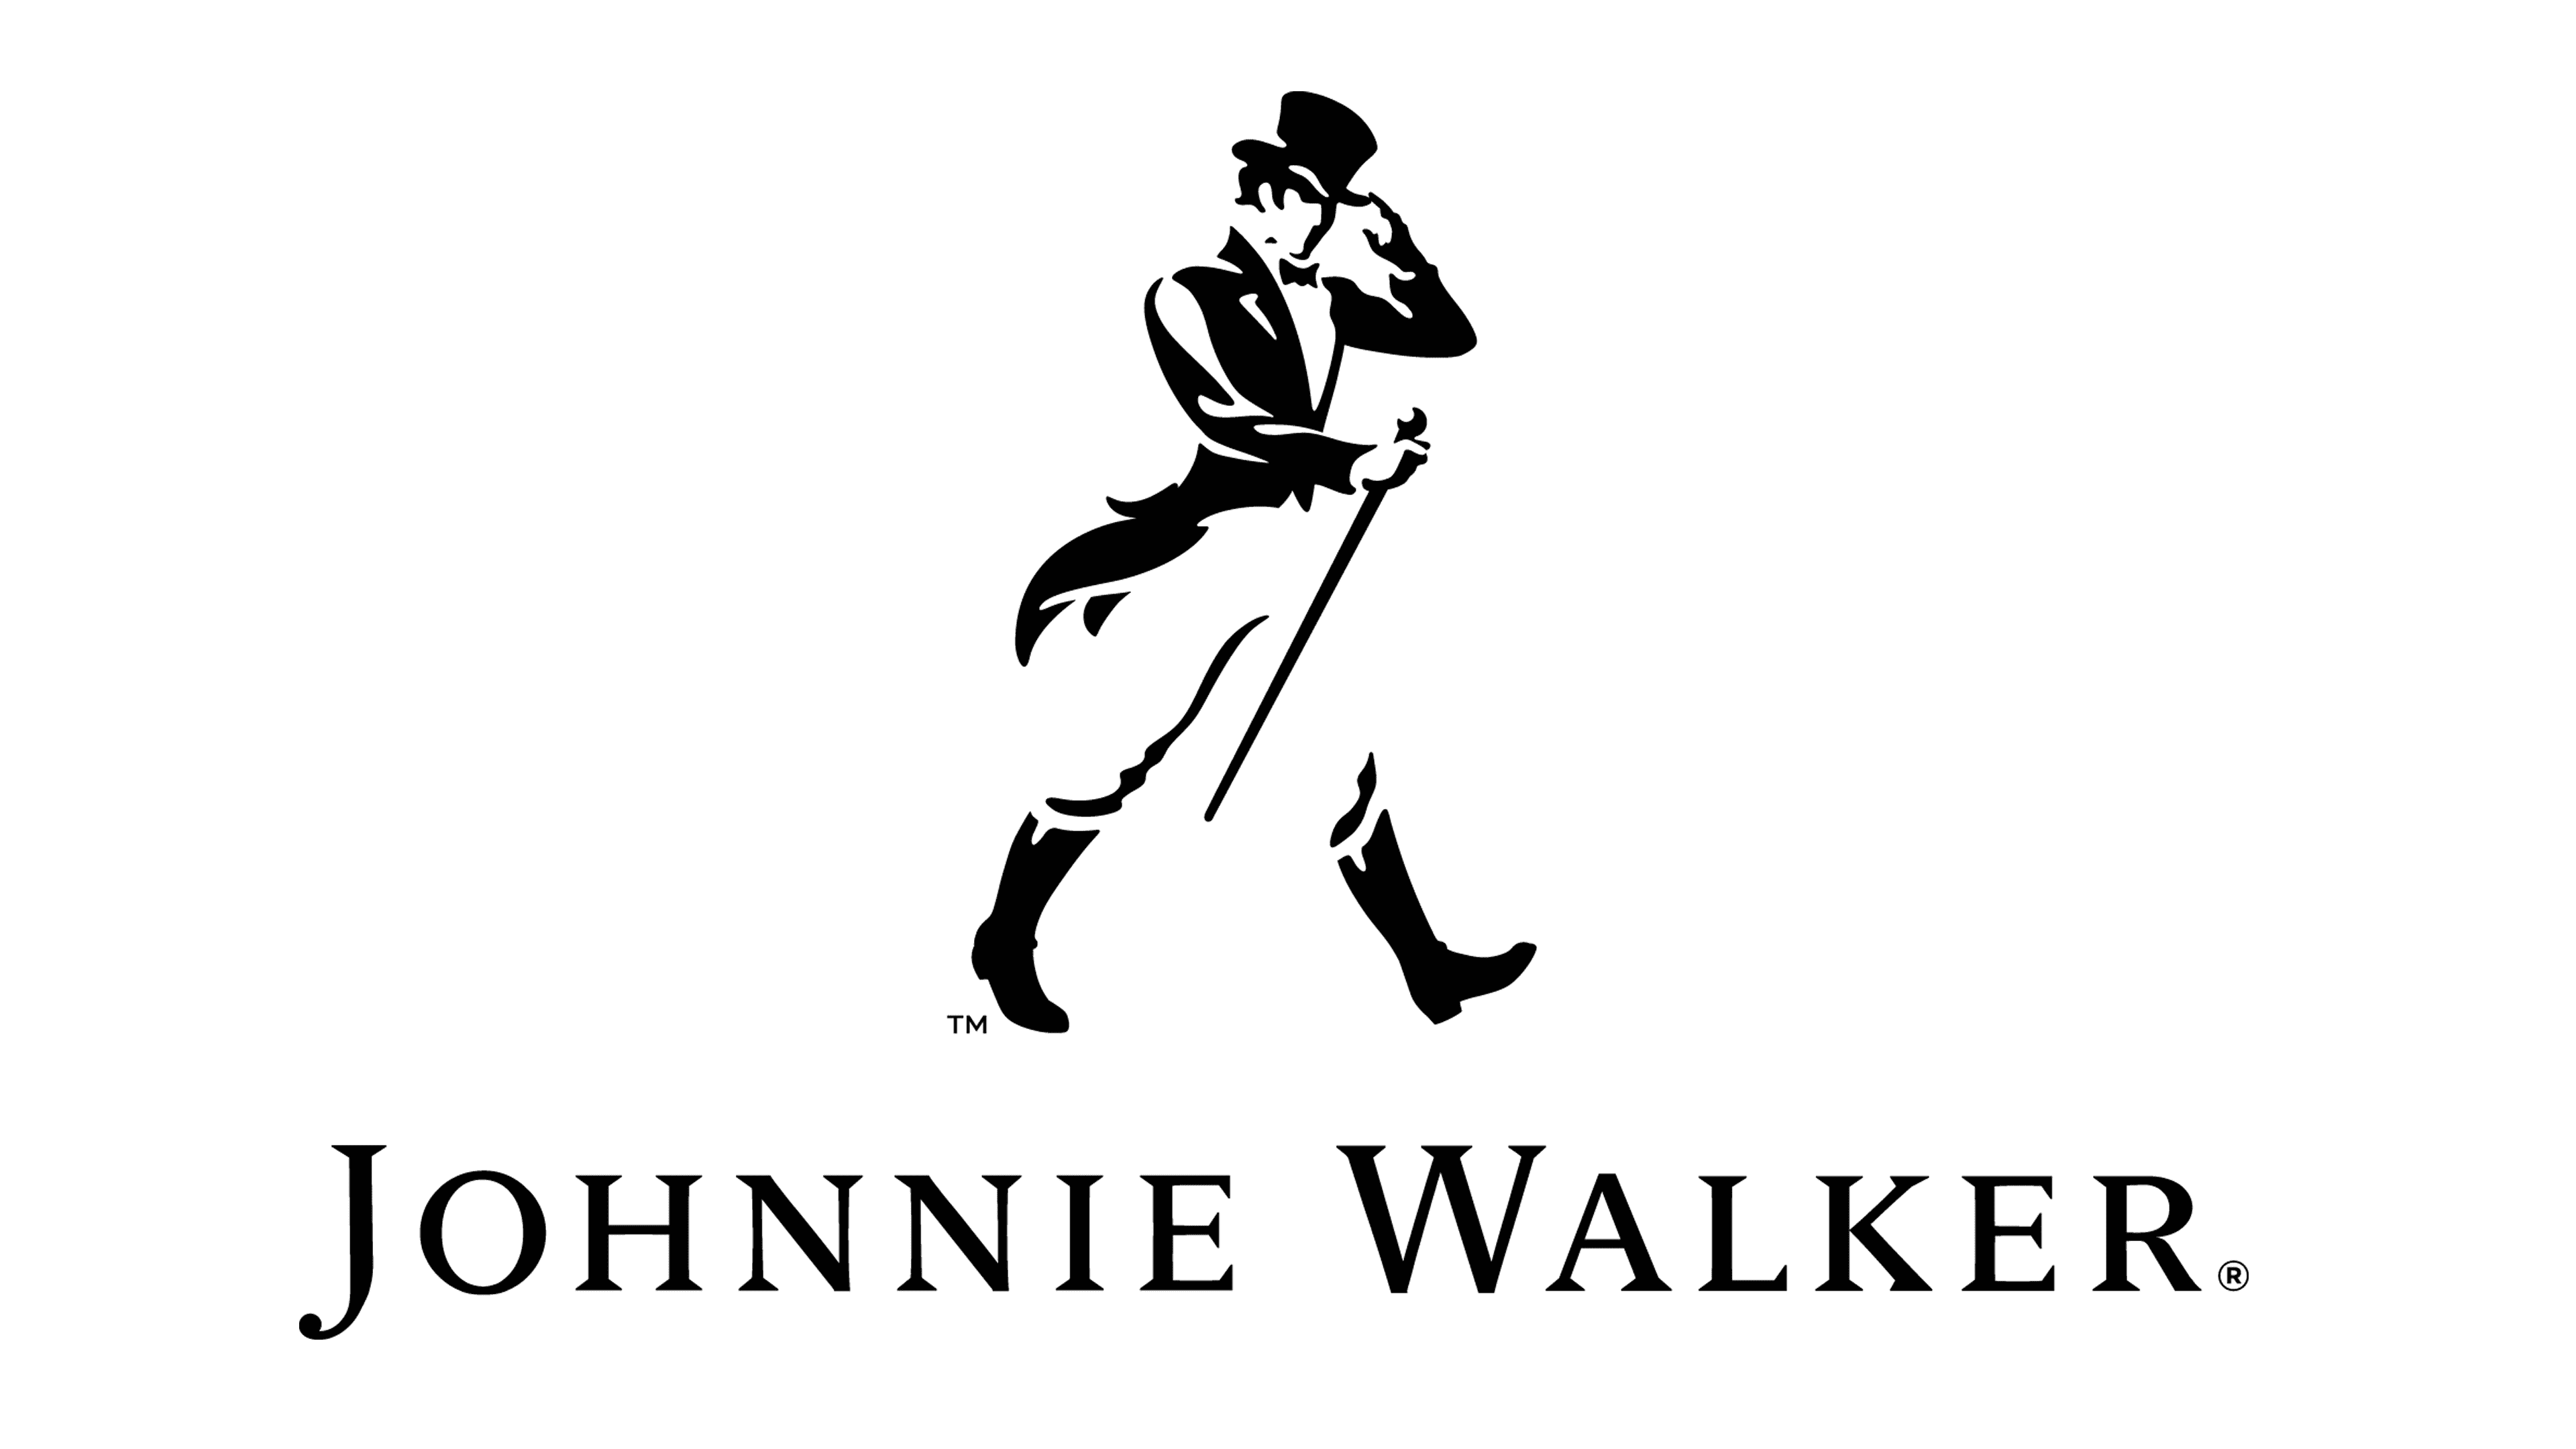 Джонни блонд. Джонни Волкер лого. Johnnie Walker логотип. Johnnie Walker брендбук. Johnnie Walker этикетка.